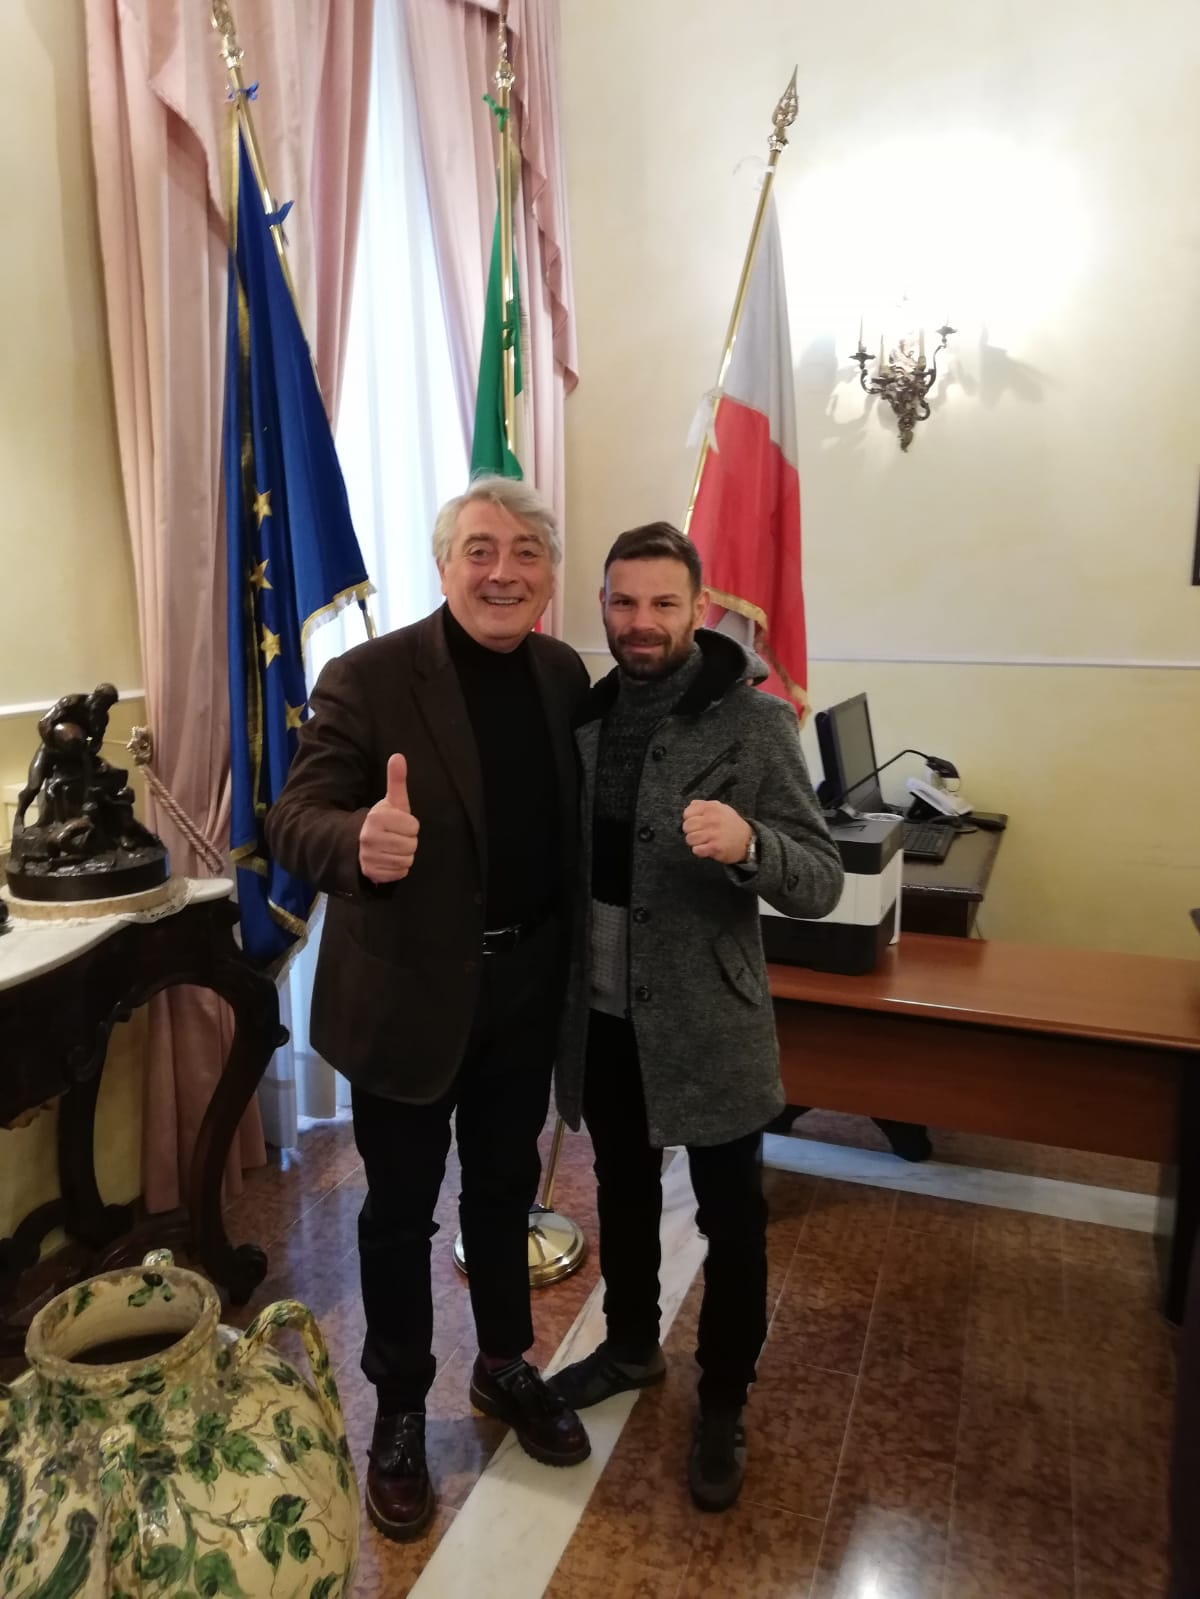 Avellino| Biancardi incontra Tommasone: orgoglio d’Irpinia, tutti a tifare per lui